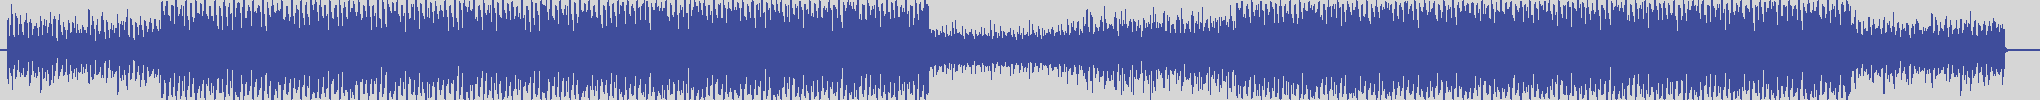 nf_boyz_records [NFY004] Lovre Ivanec - Mistery Car [H. Jam's House Mix] audio wave form